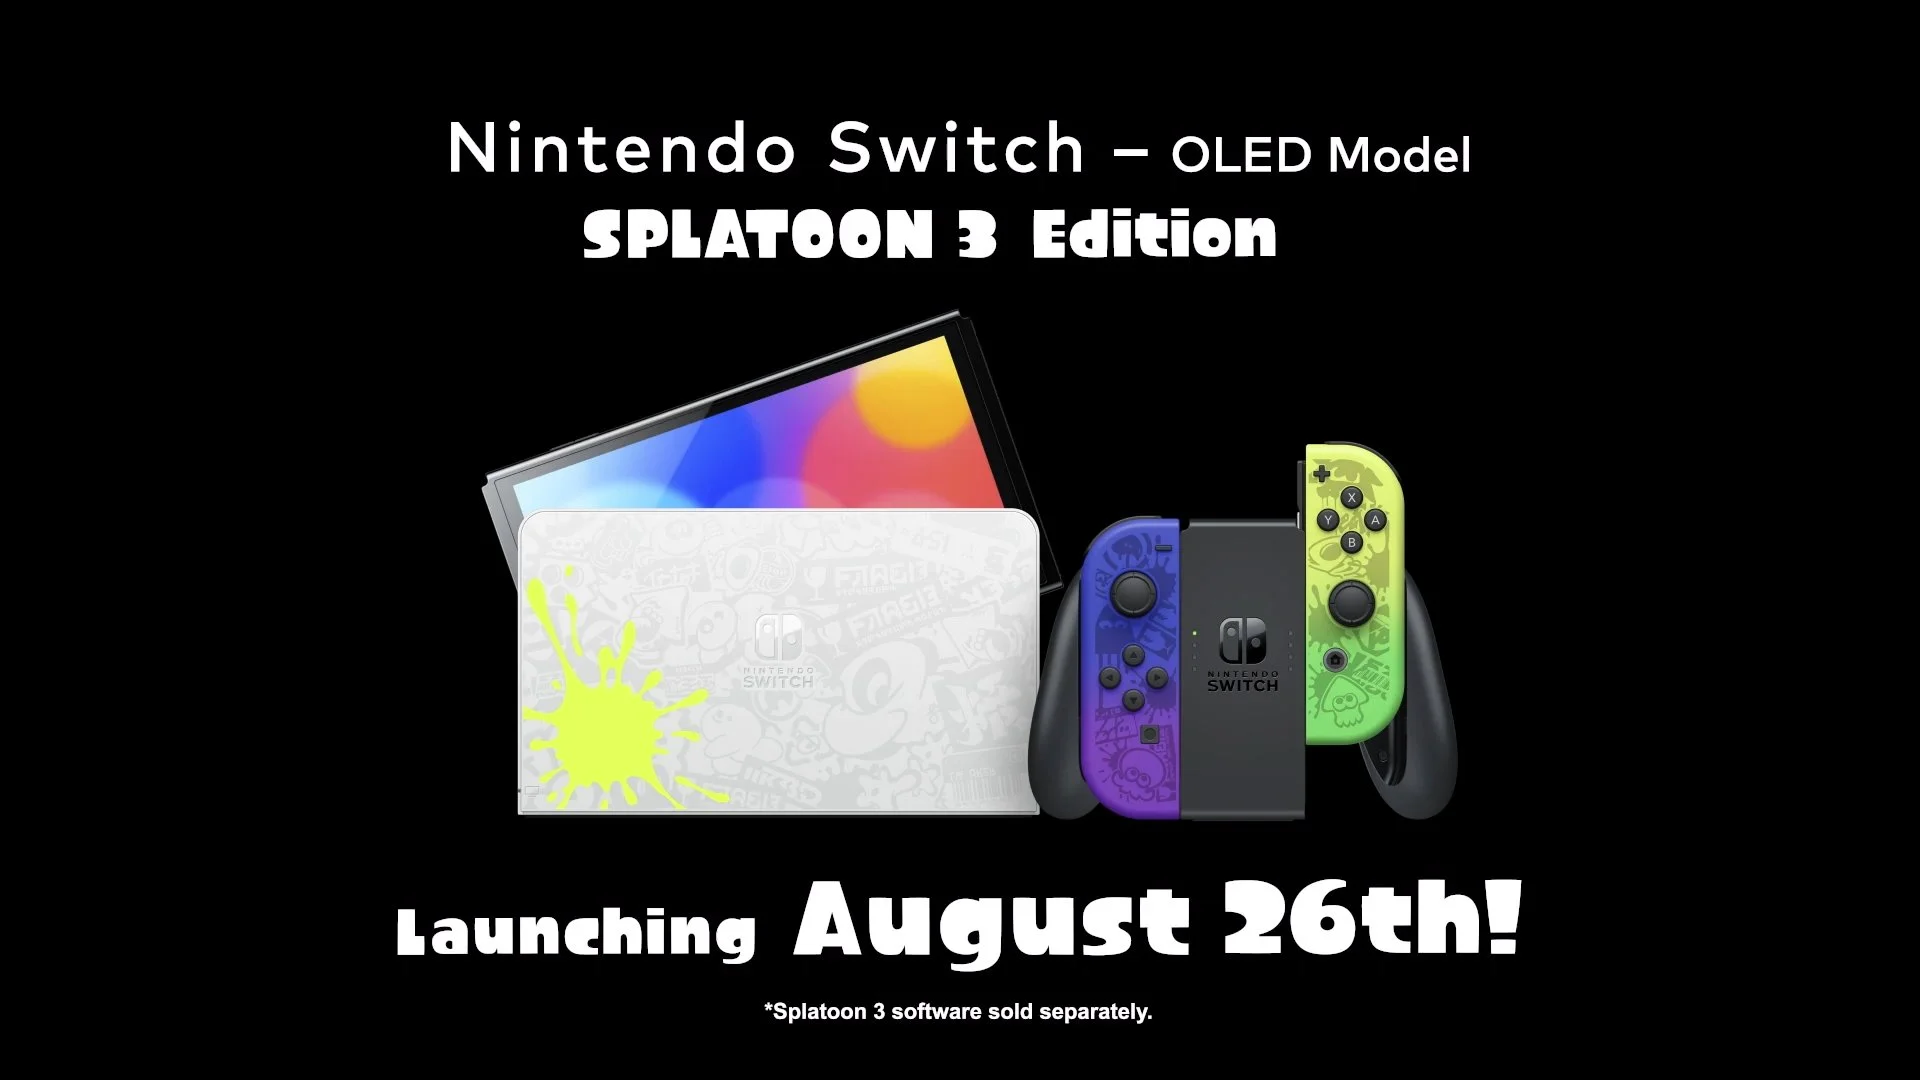  Nintendo Switch OLED Splatoon 3 Console